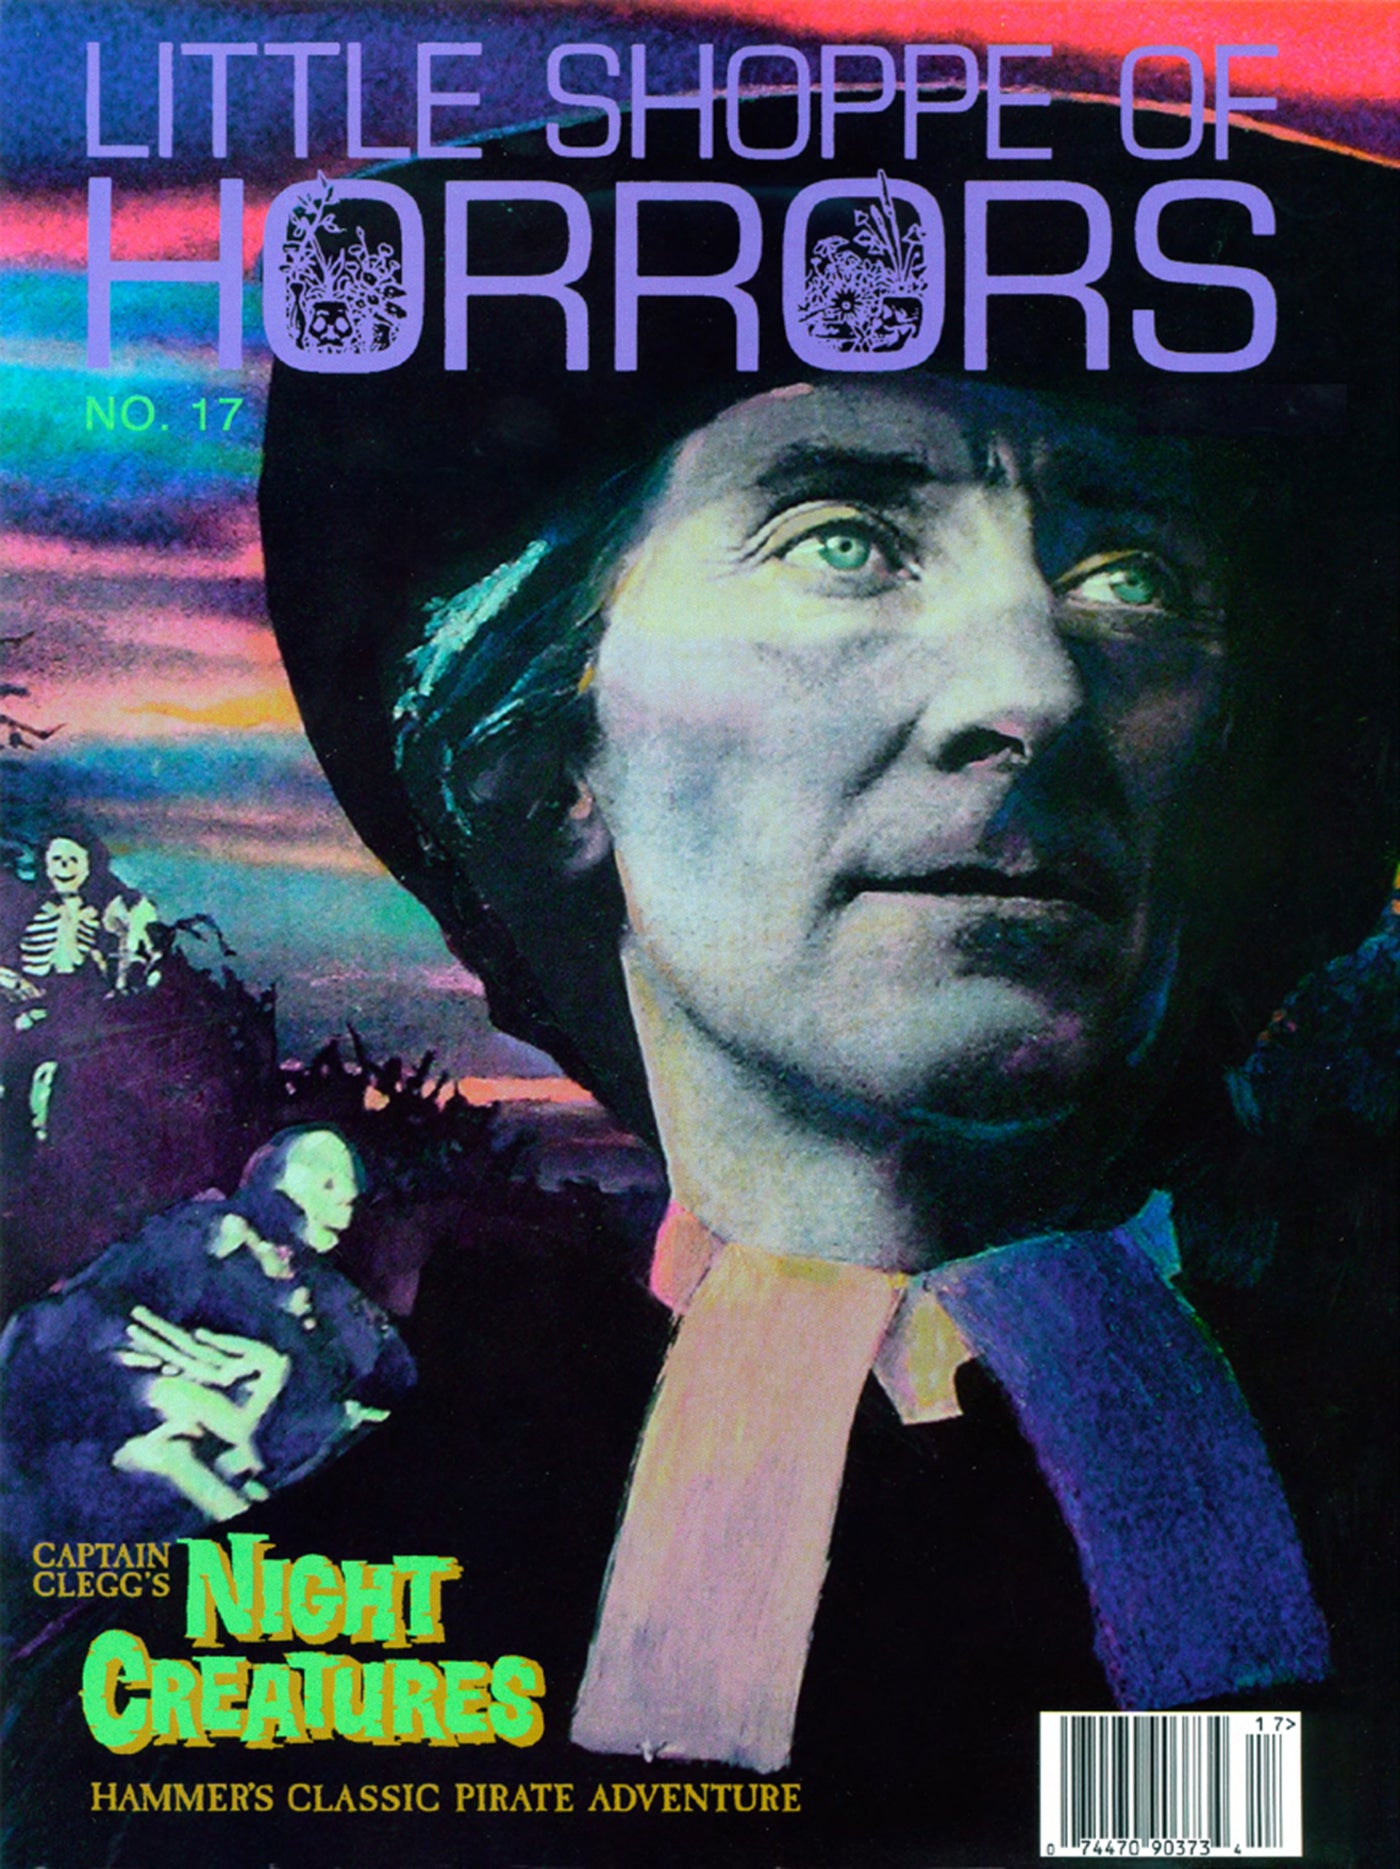 Little Shoppe of Horrors magazine #17 (ebook) - BearManor Manor